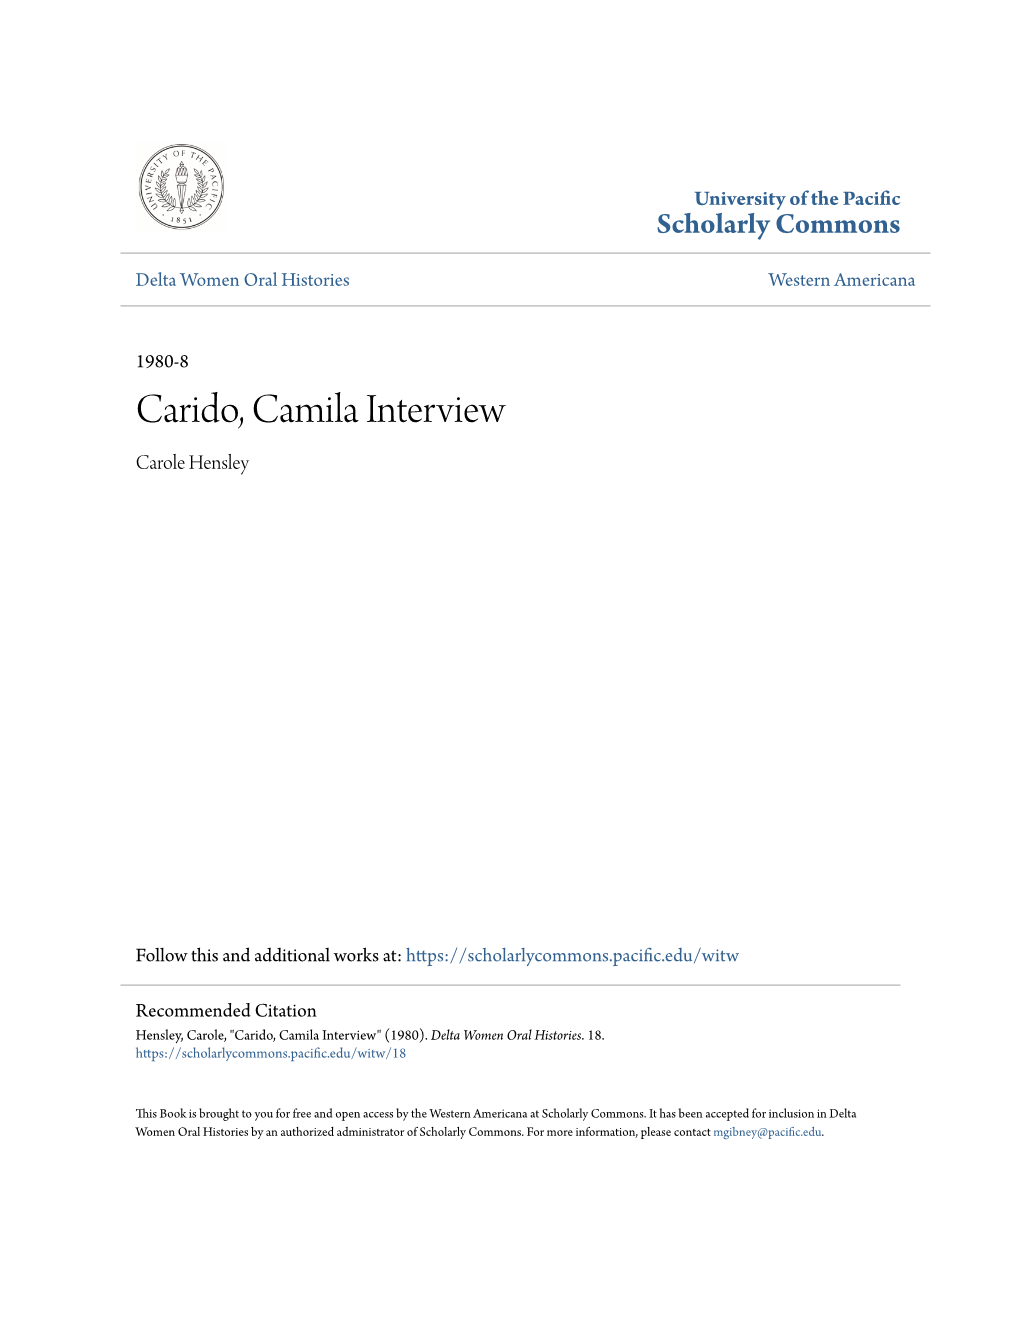 Carido, Camila Interview Carole Hensley